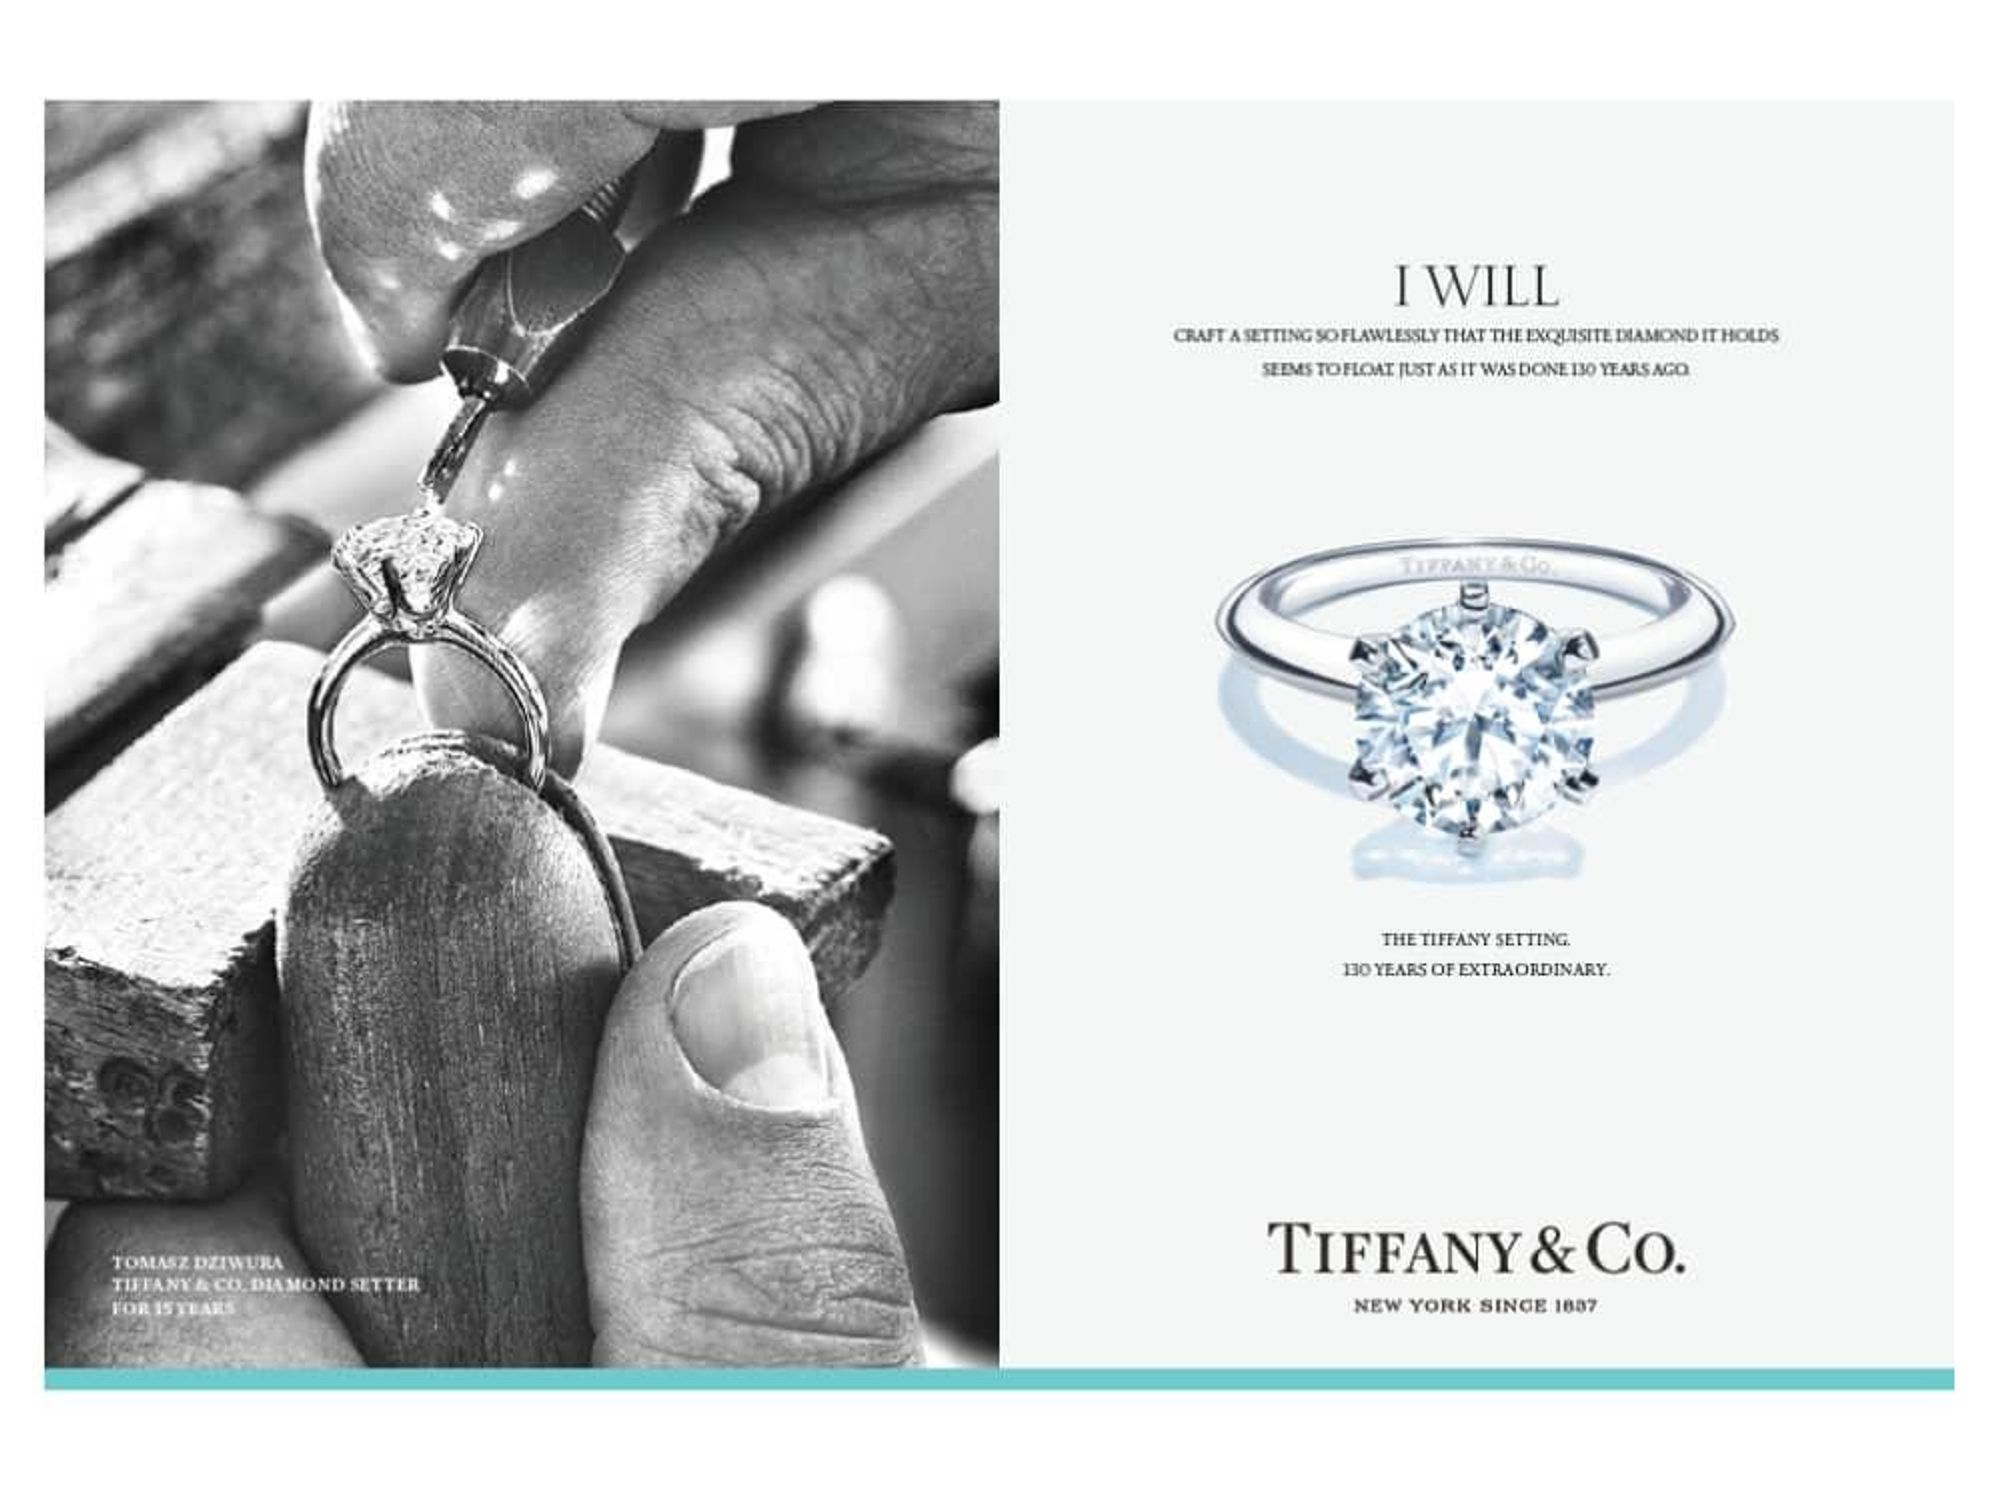 Tiffany & Co 's ward skin 